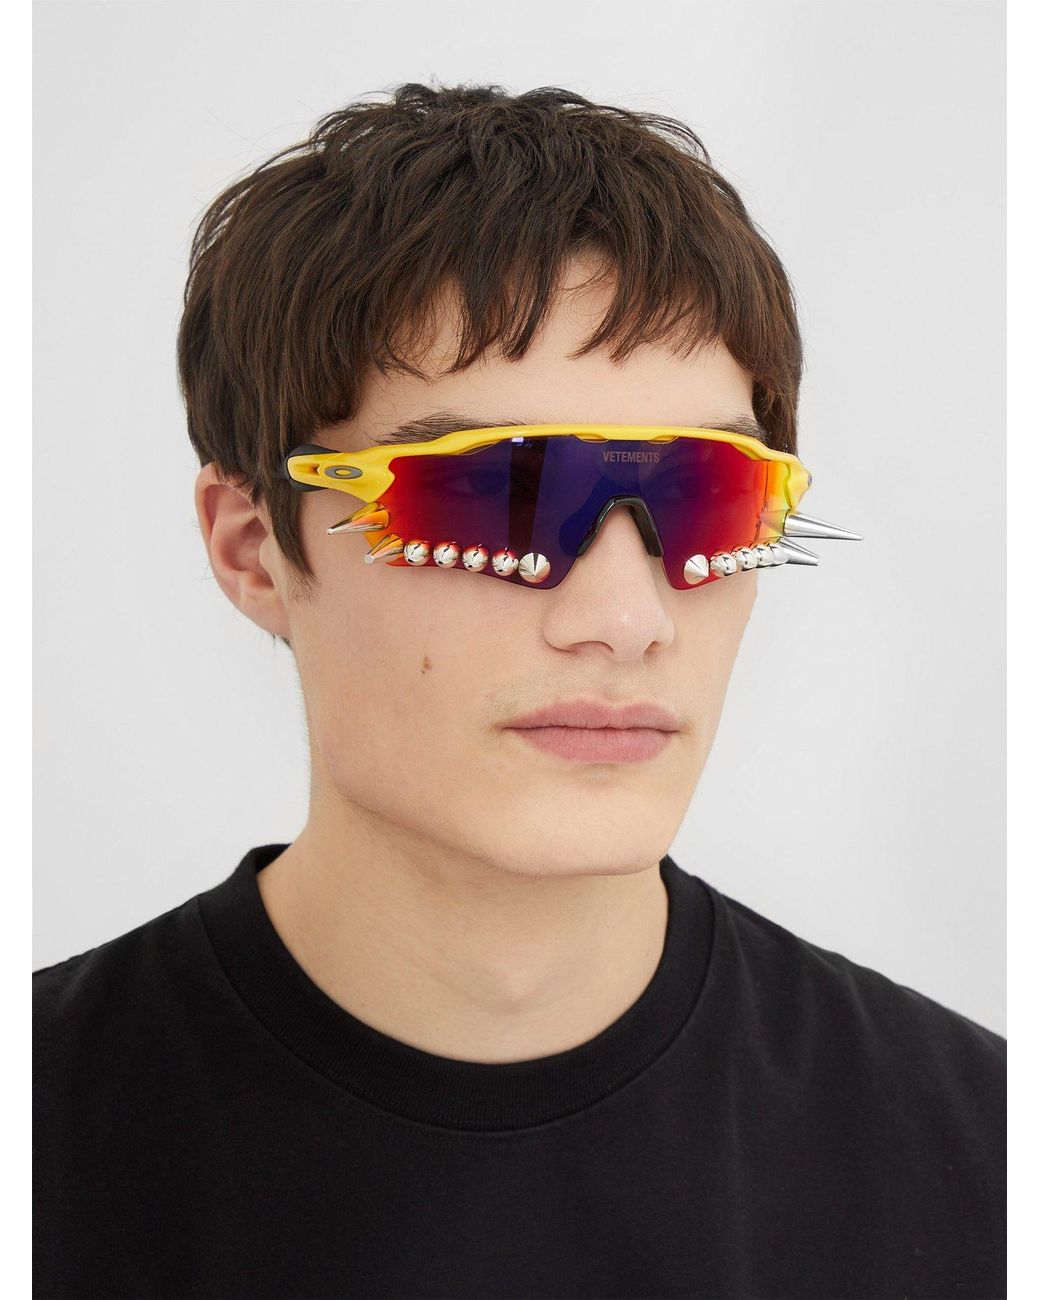 Vetements X Oakley Spikes 400 Sunglasses for Men | Lyst